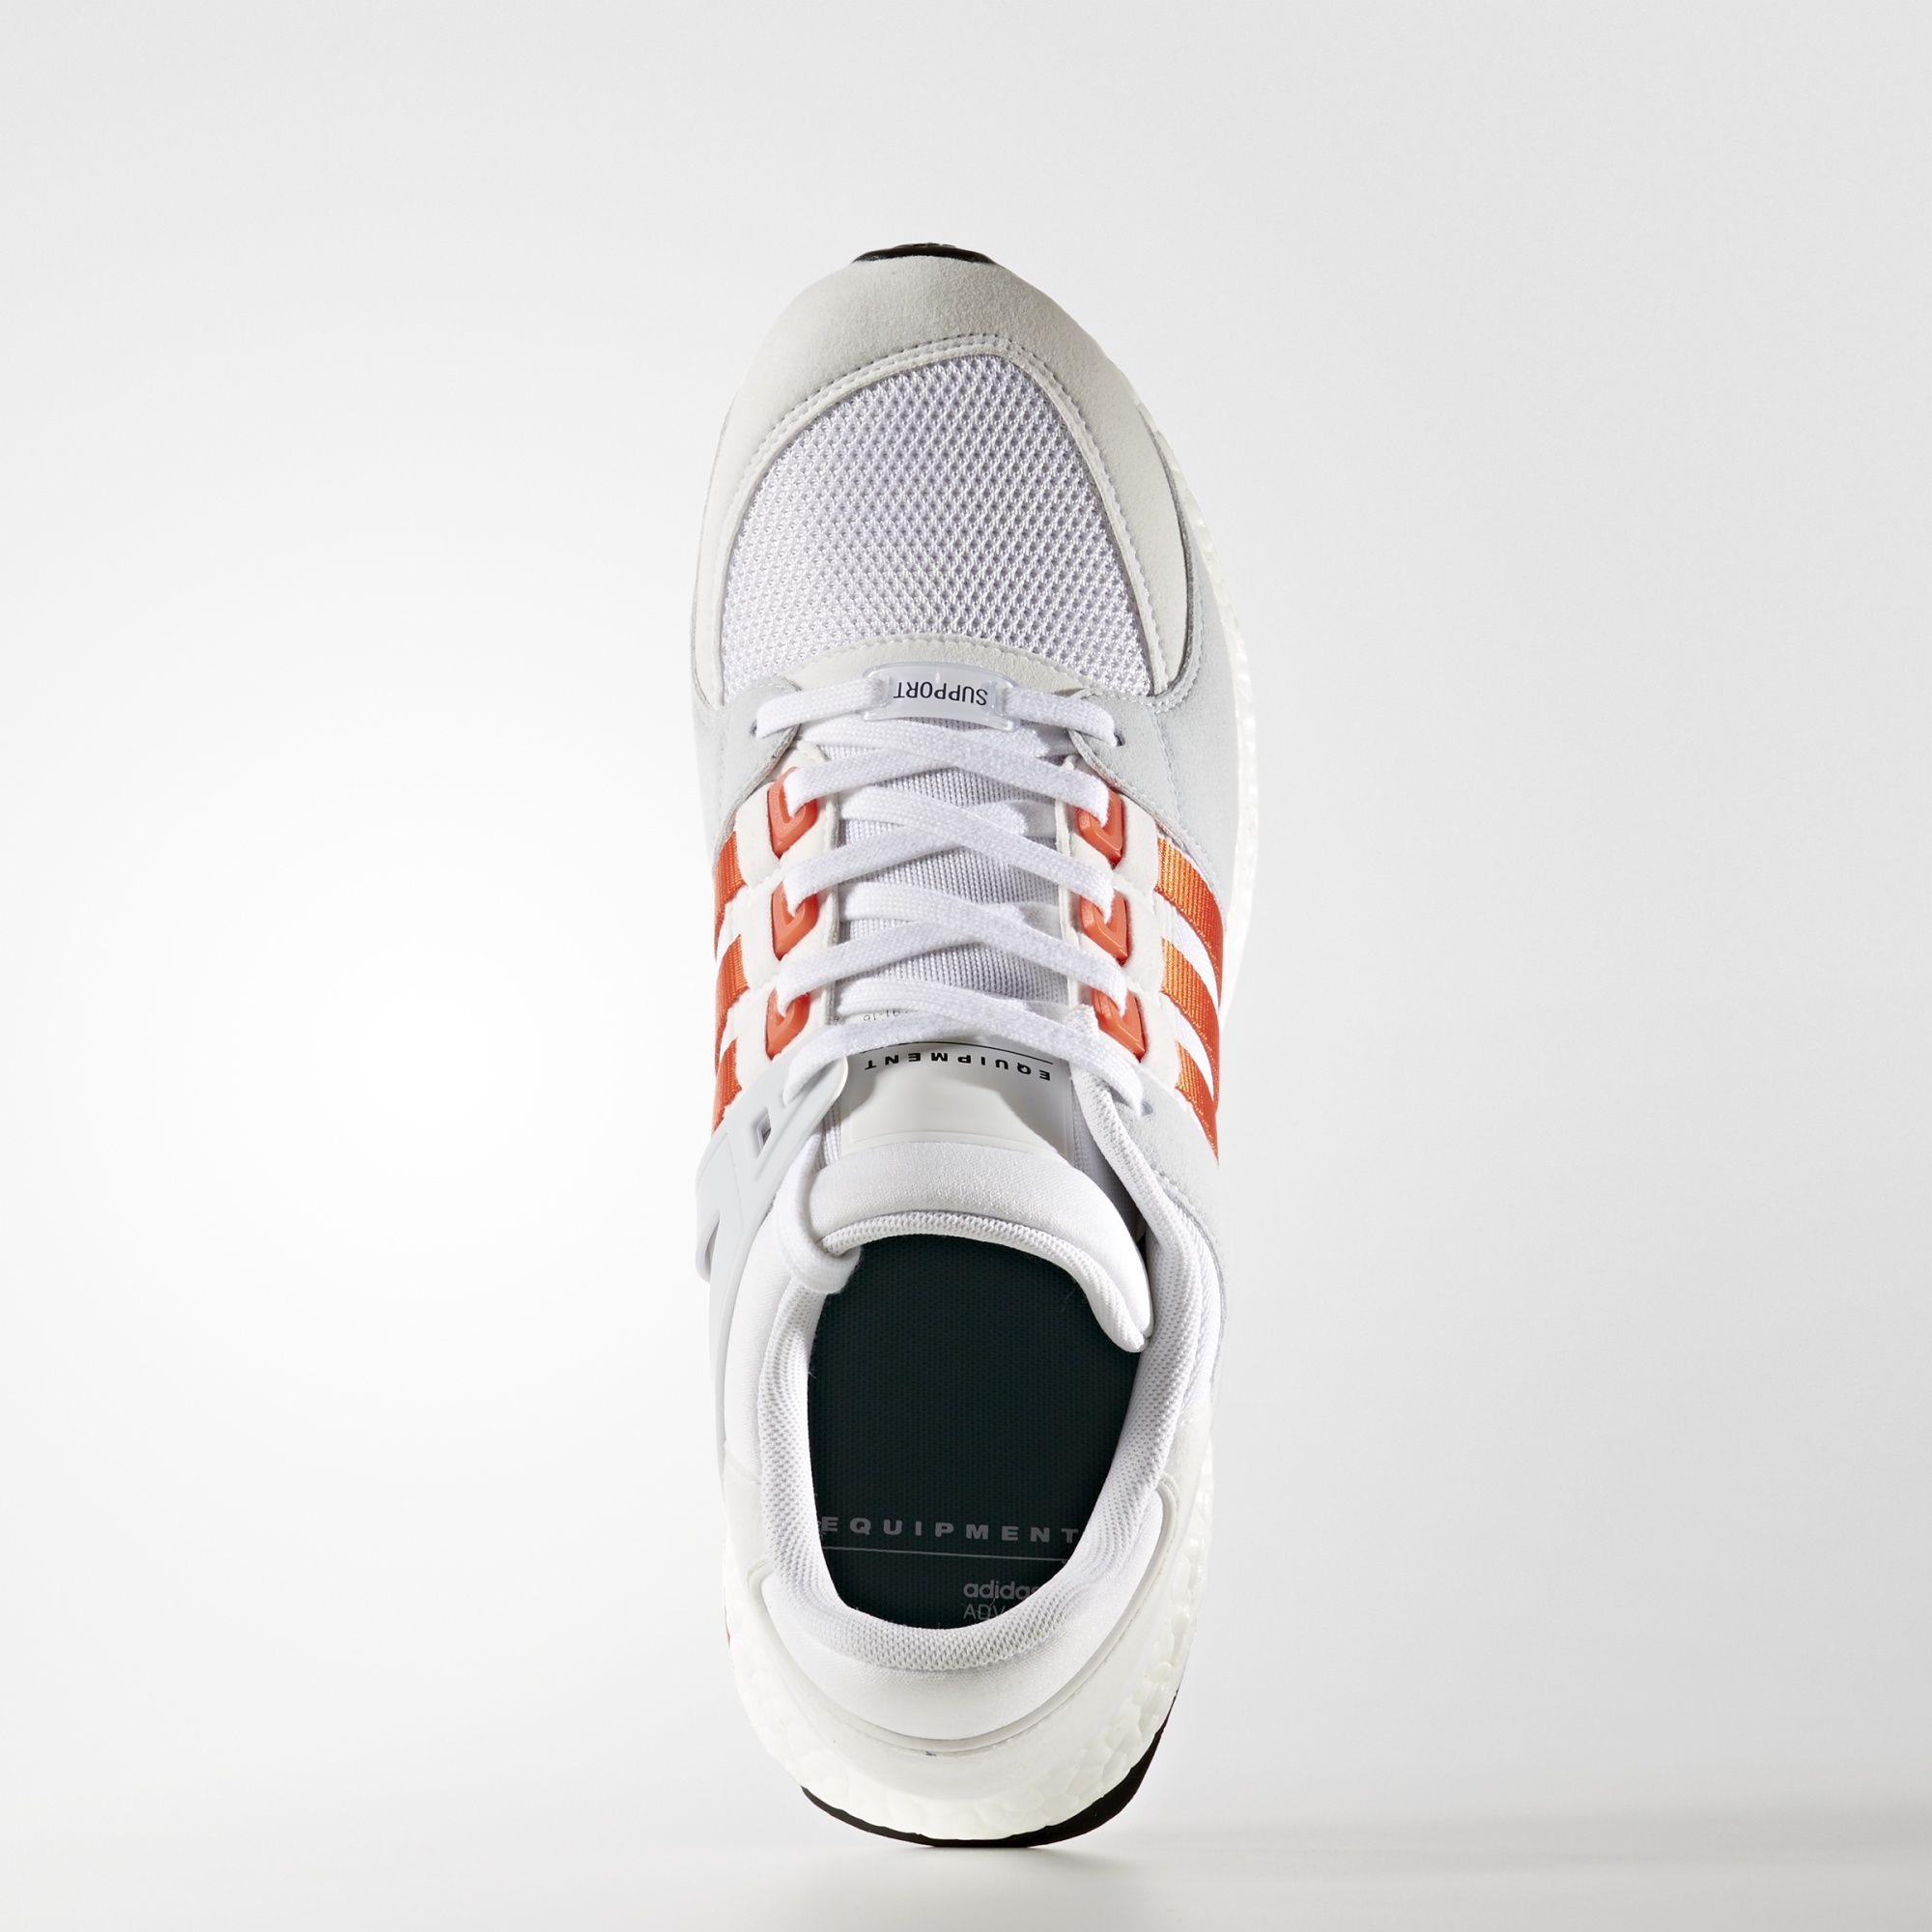 Adidas EQT Support Ultra
White / Orange / Grey